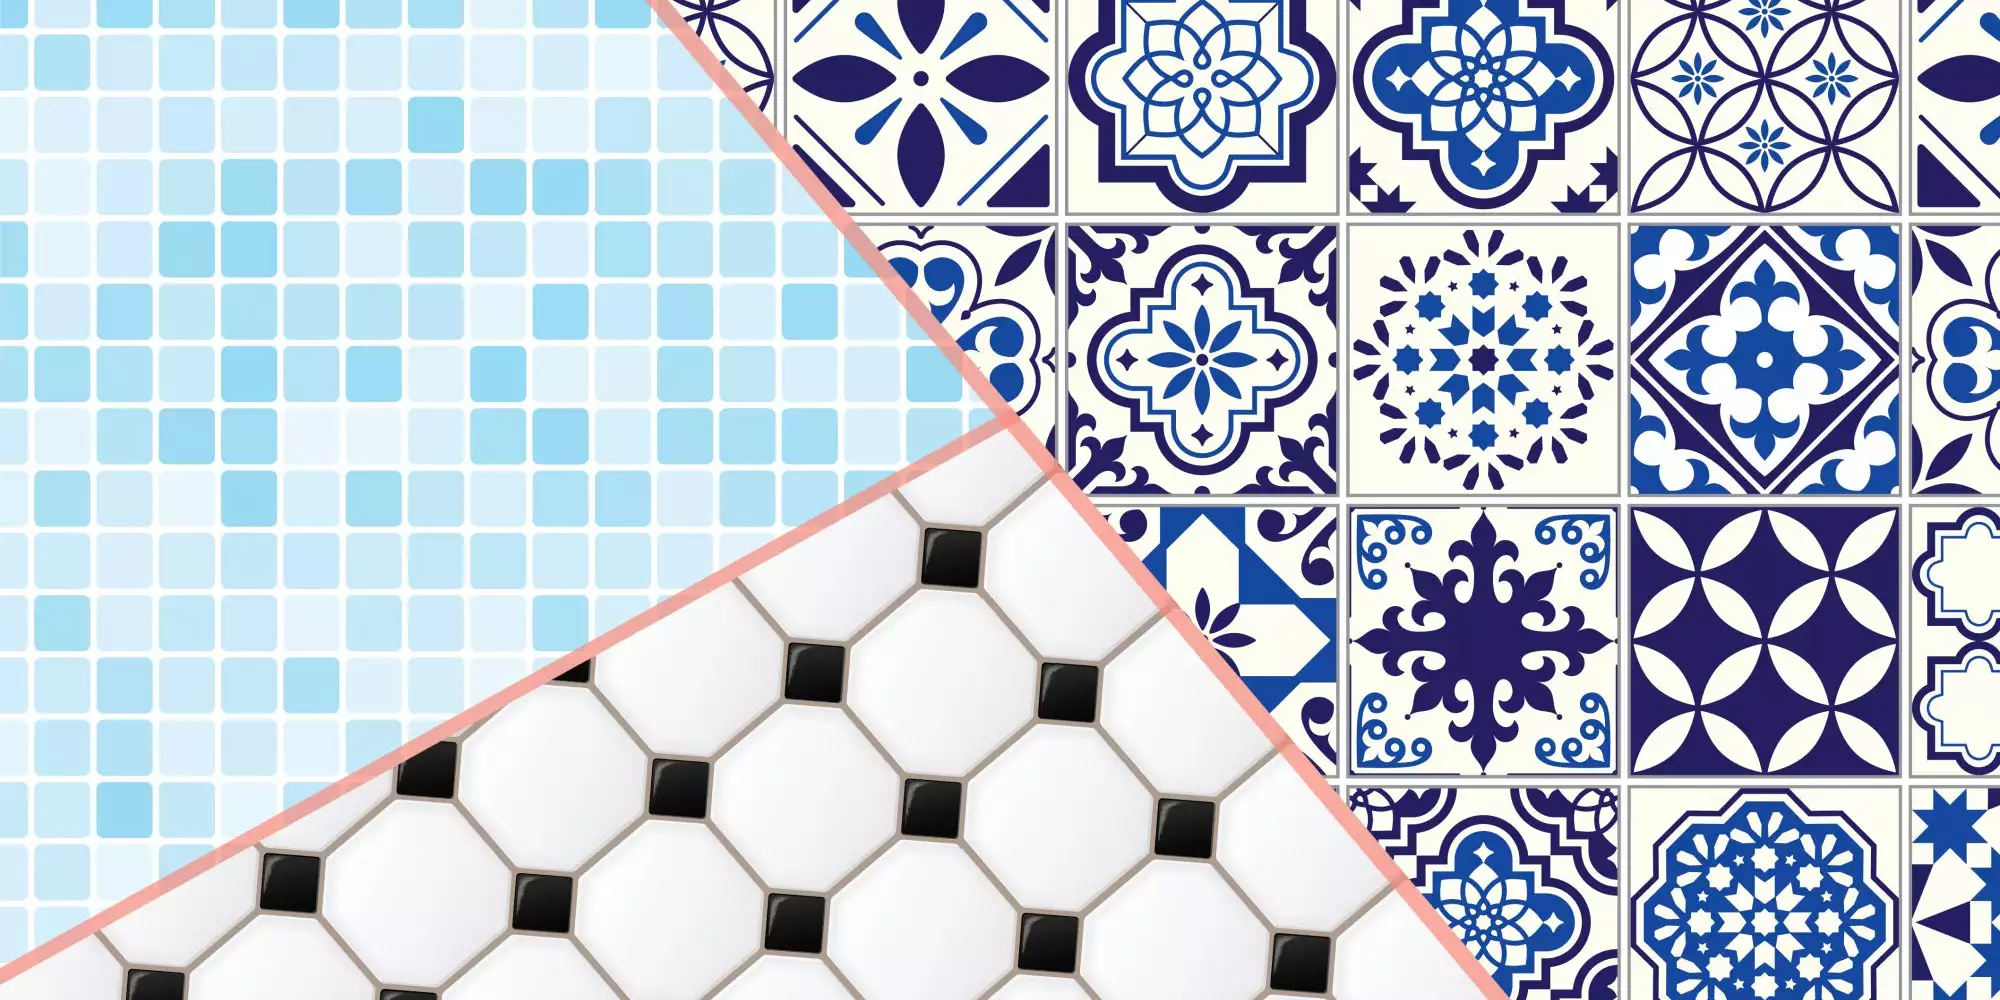 Different tile designs